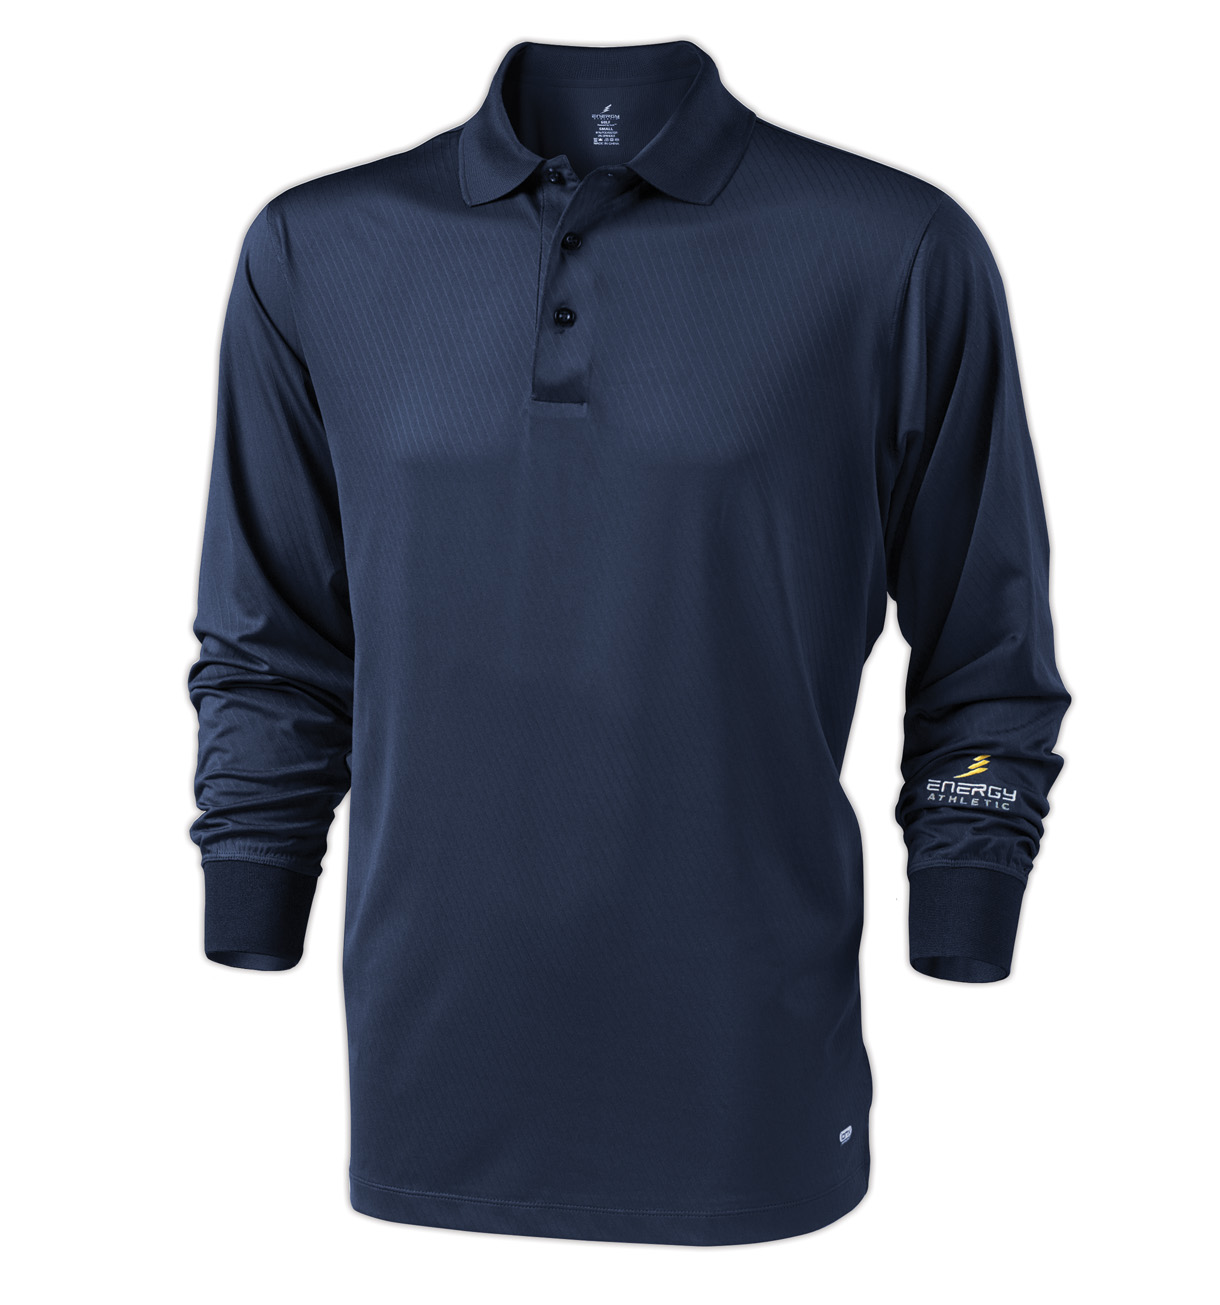 Energy Athletic Golf Shirt Review « Ottawa Golf Blog